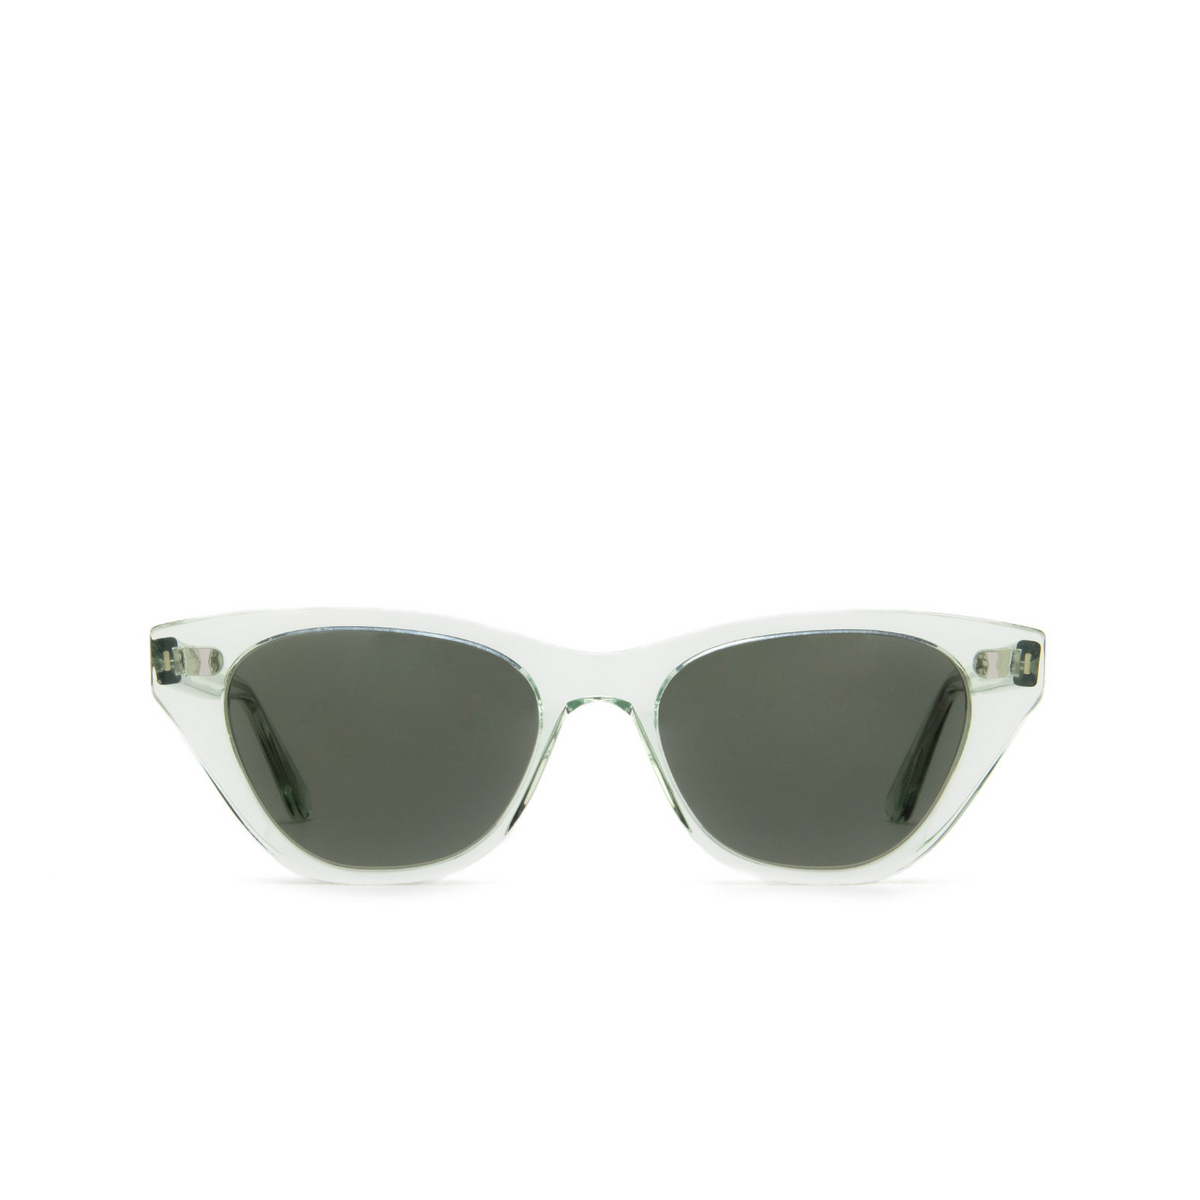 Cubitts CYNTHIA Sunglasses CYN-R-SAG Sage - front view